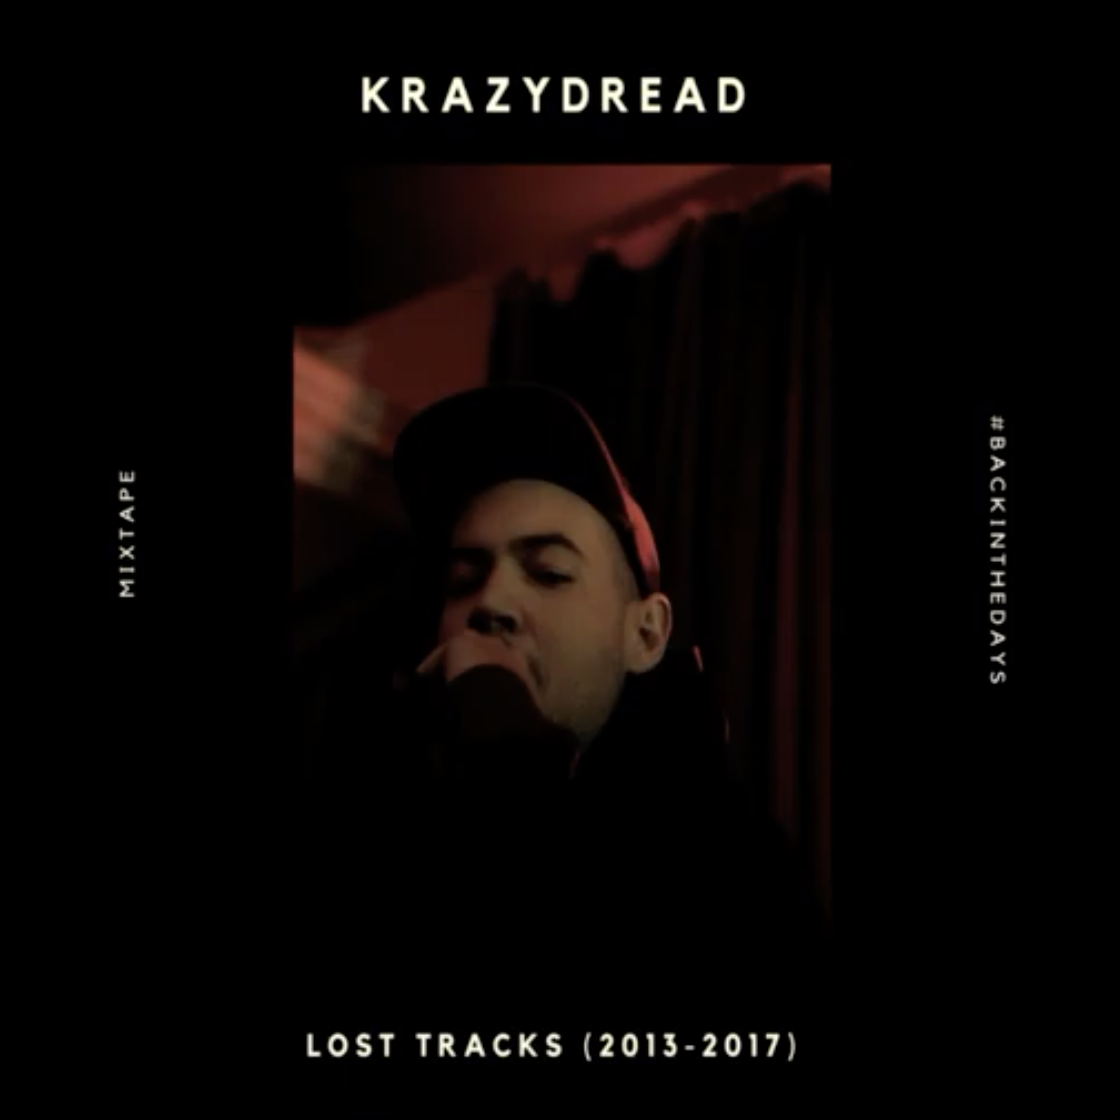 14 - KrazyDread - mixtape Faixas Perdidas (2013-2017)